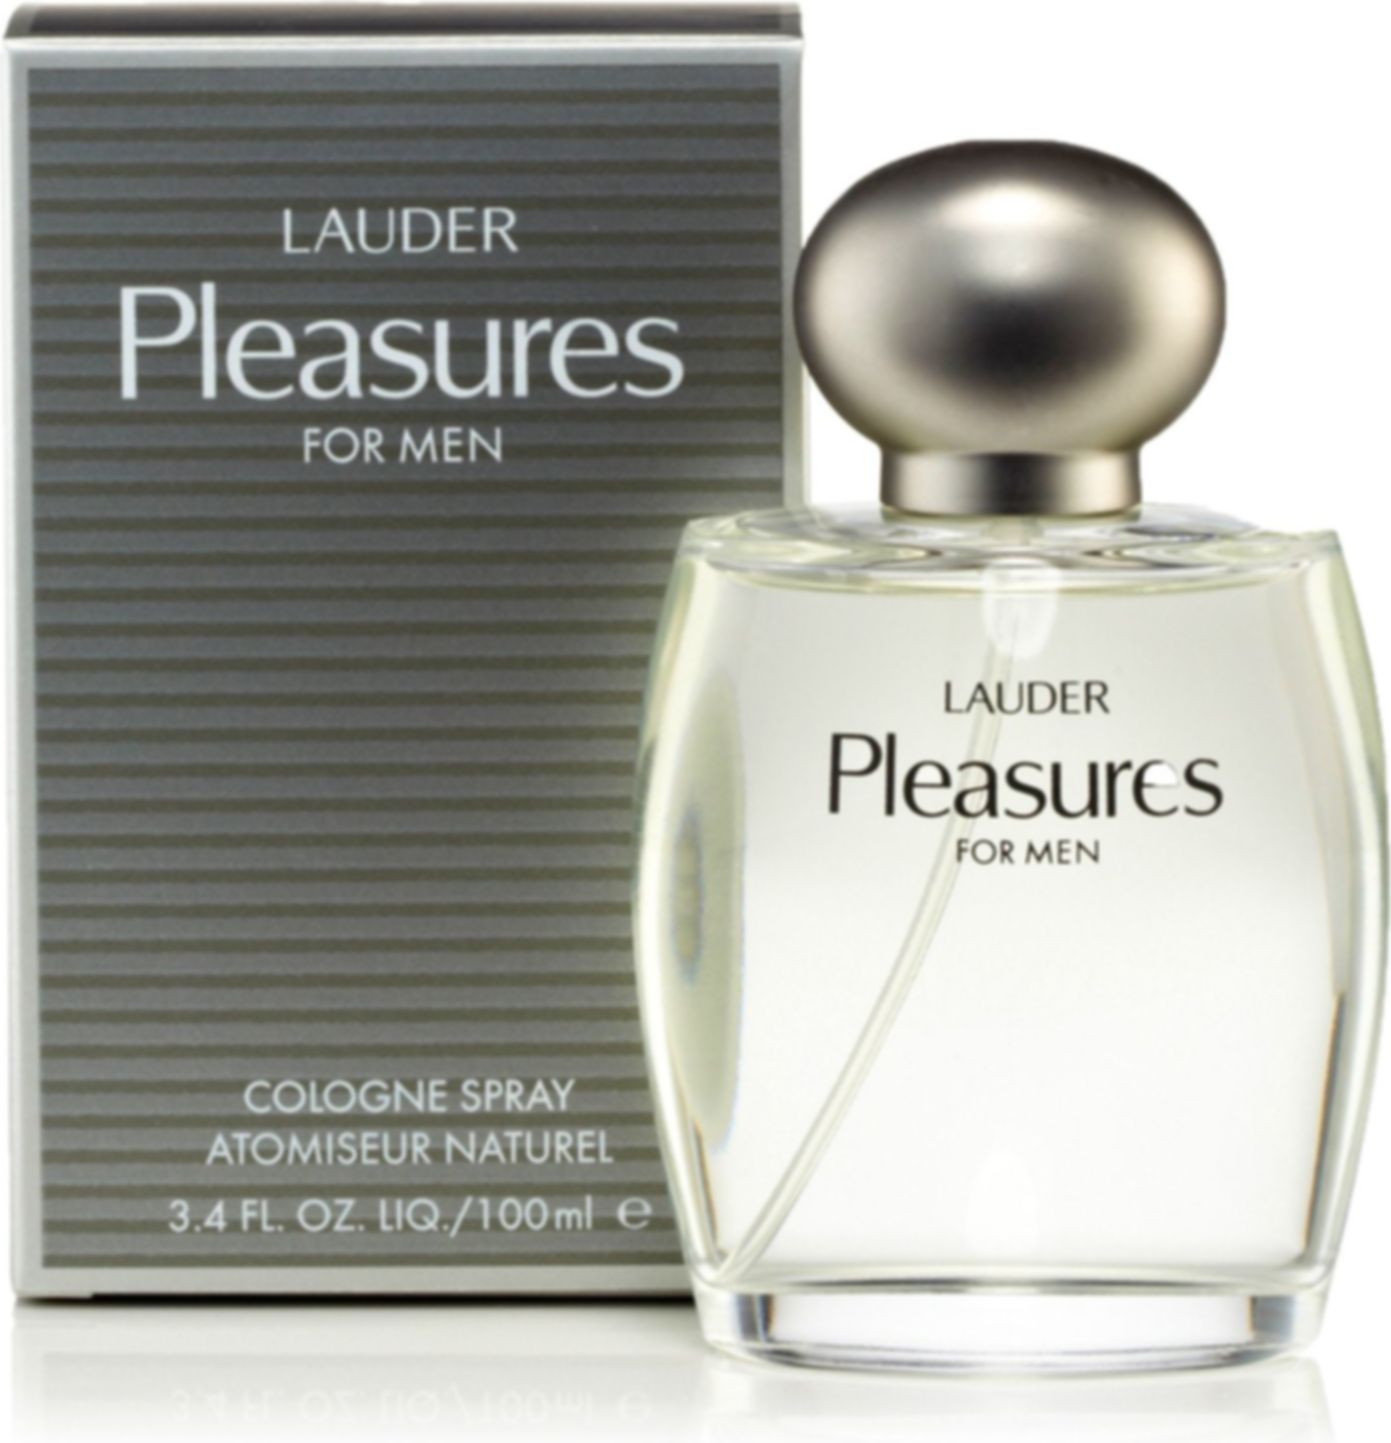 Estee Lauder Pleasures for Men Eau de Cologne doos